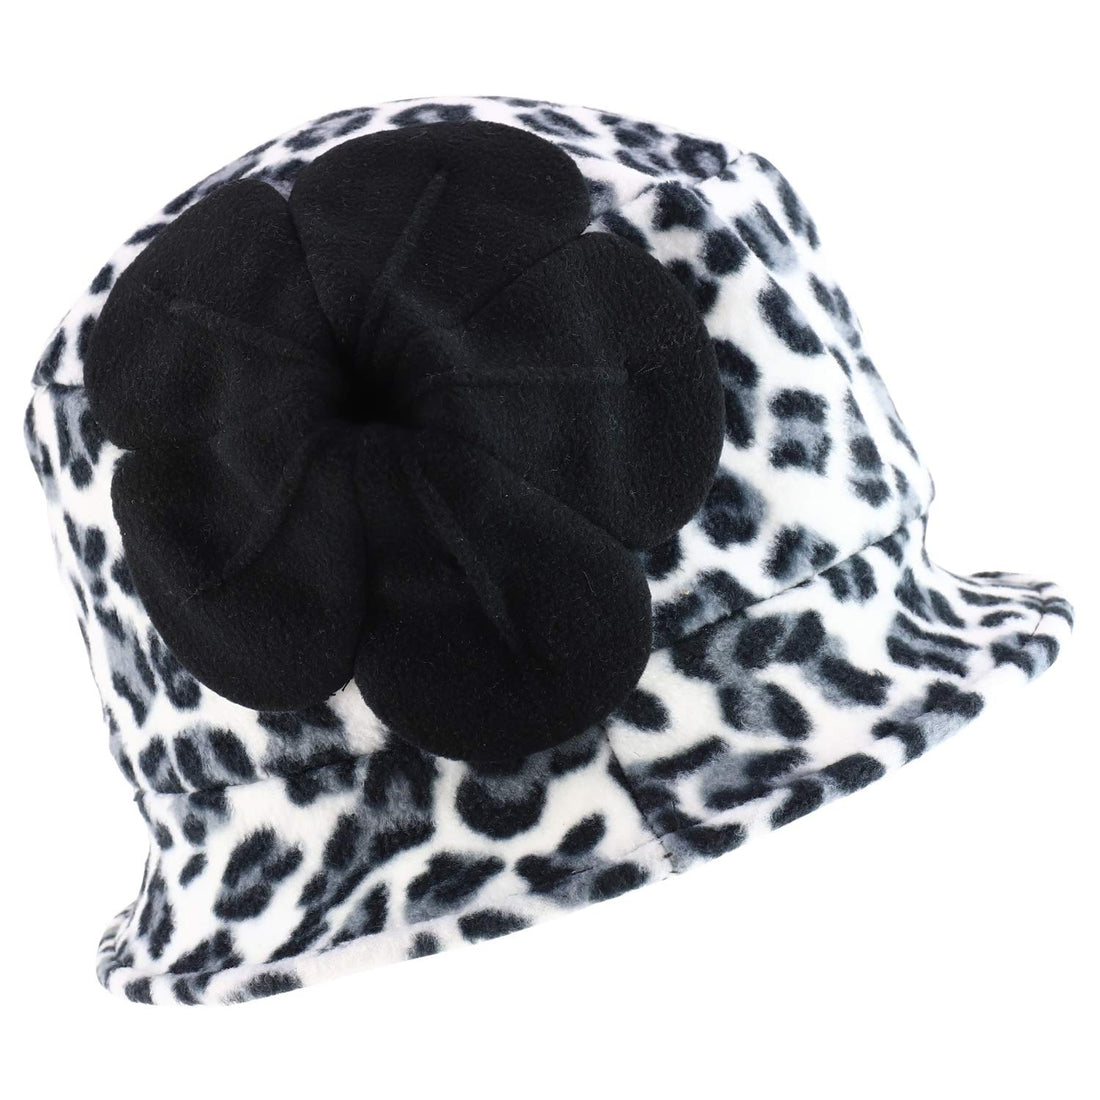 Trendy Apparel Shop Women's Cheetah Designed Polar Fleece Flower Bucket Hat